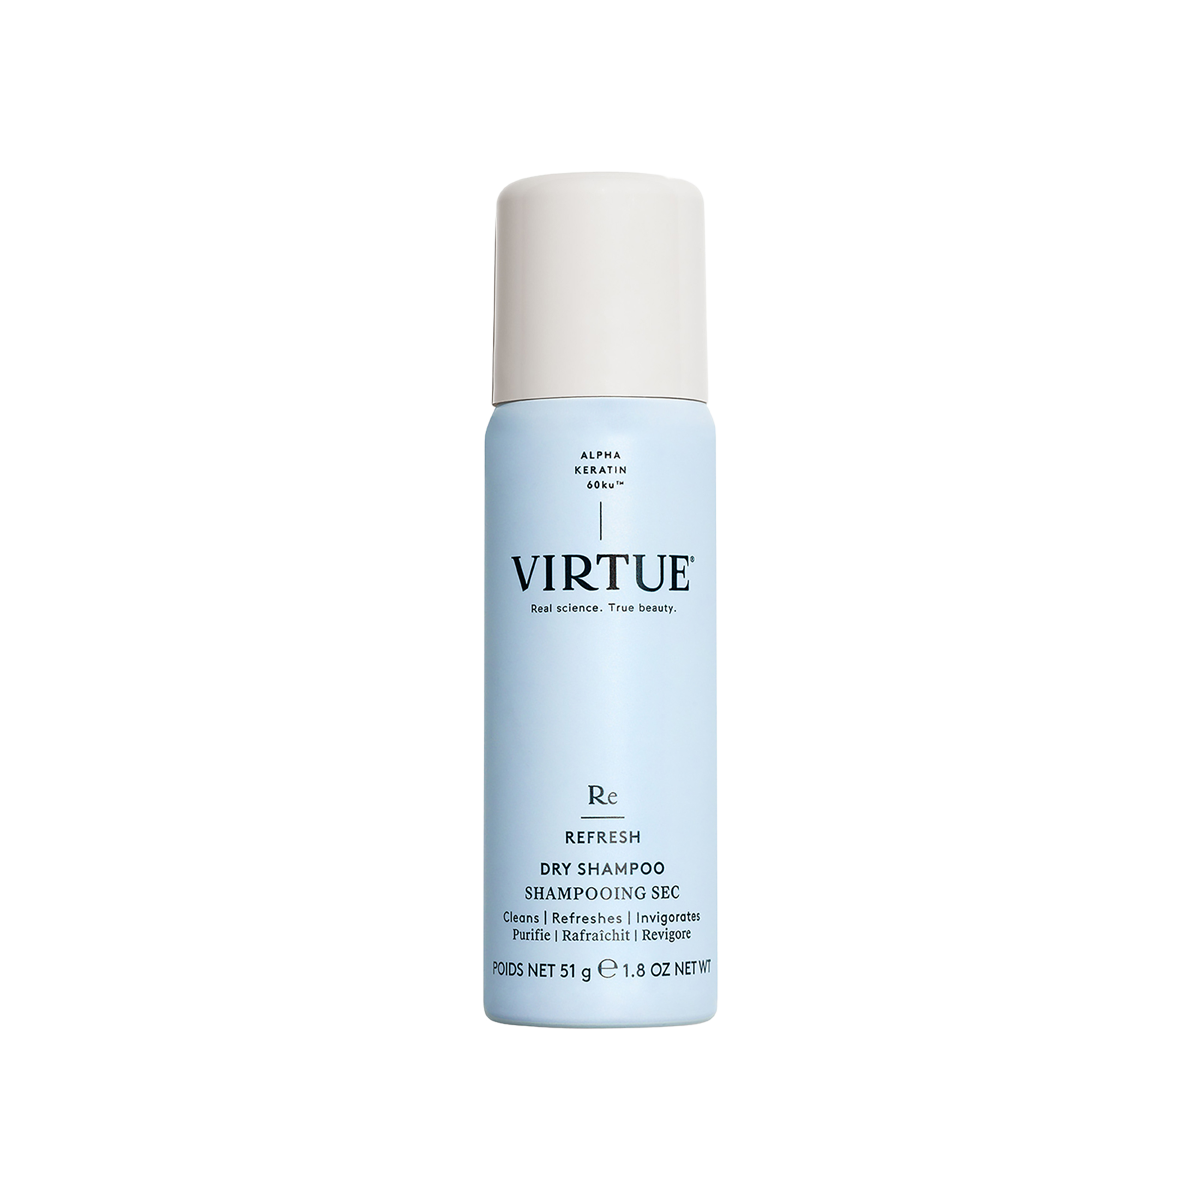 Virtue - Dry Shampoo Travel Size